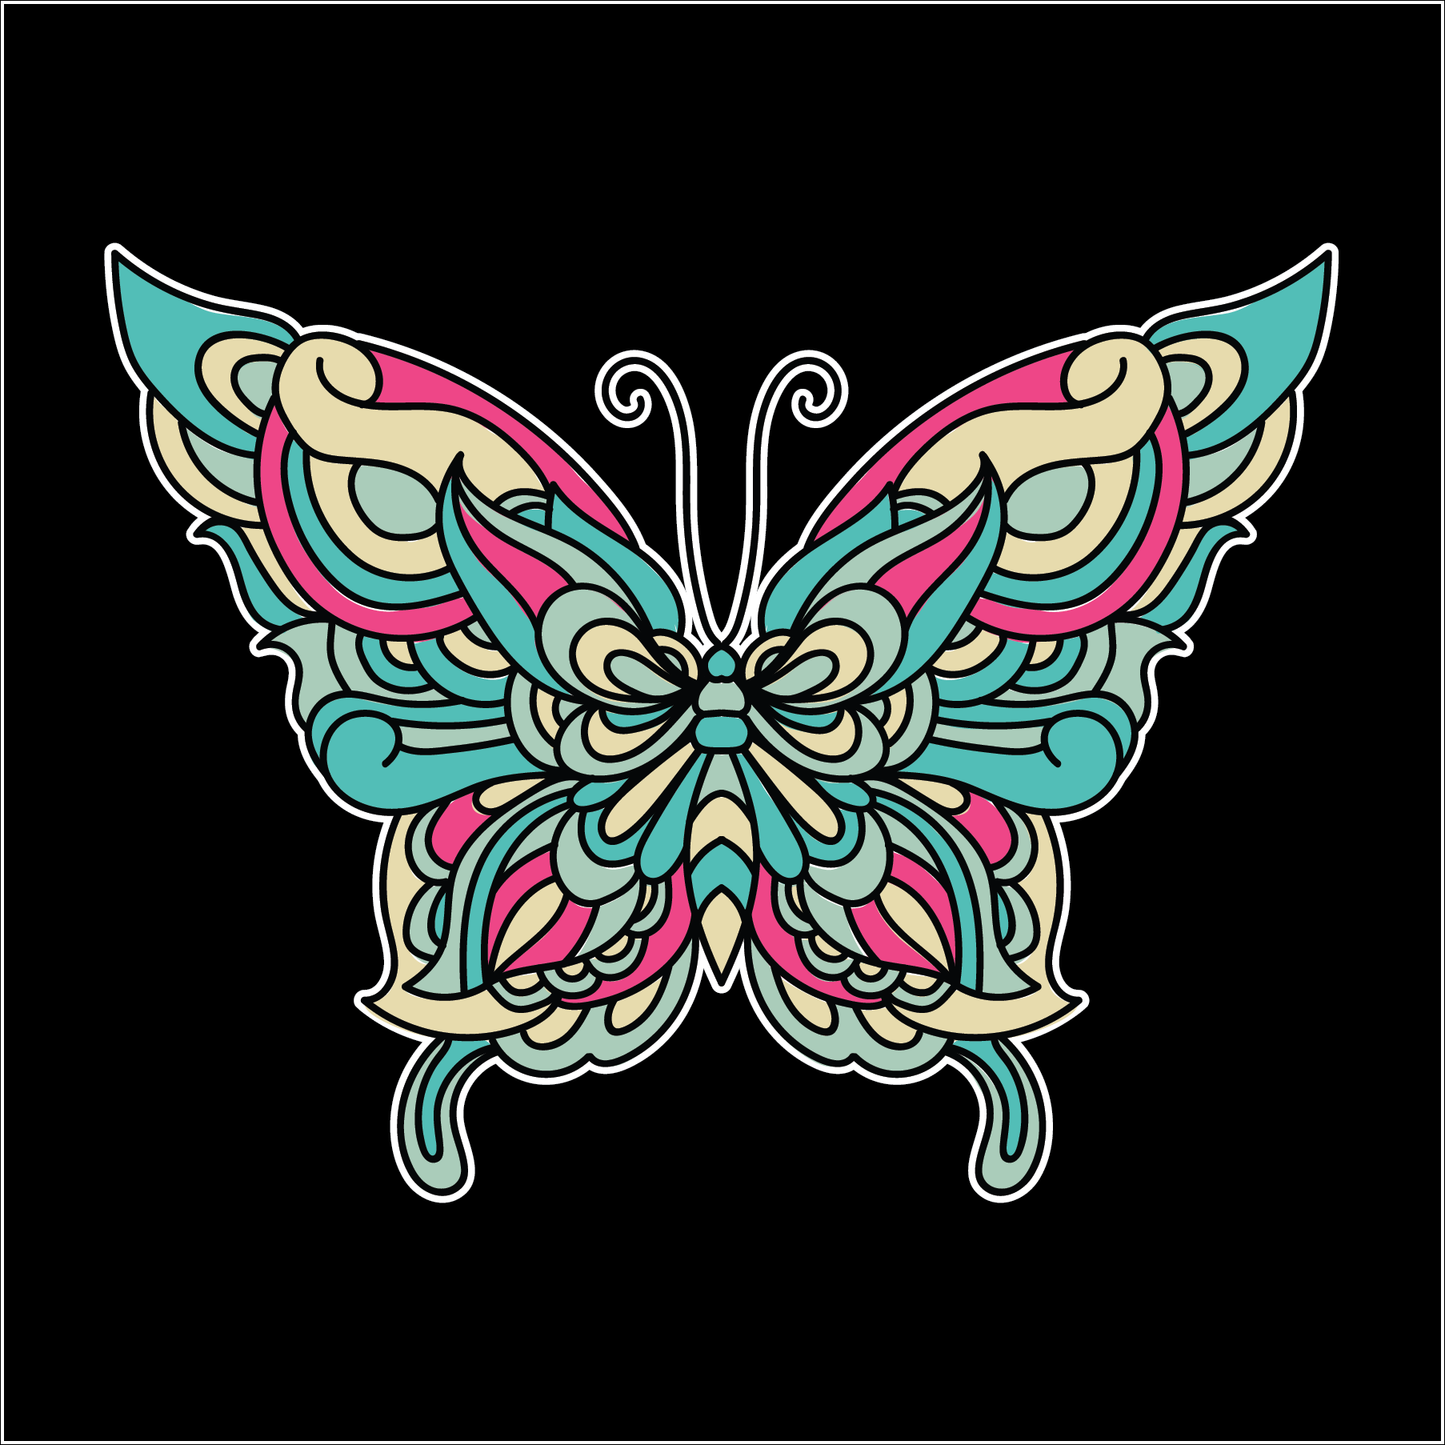 Flutter - Batch 2 - Set of Six - Hard Enamel Limited Edition Butterfly Pins